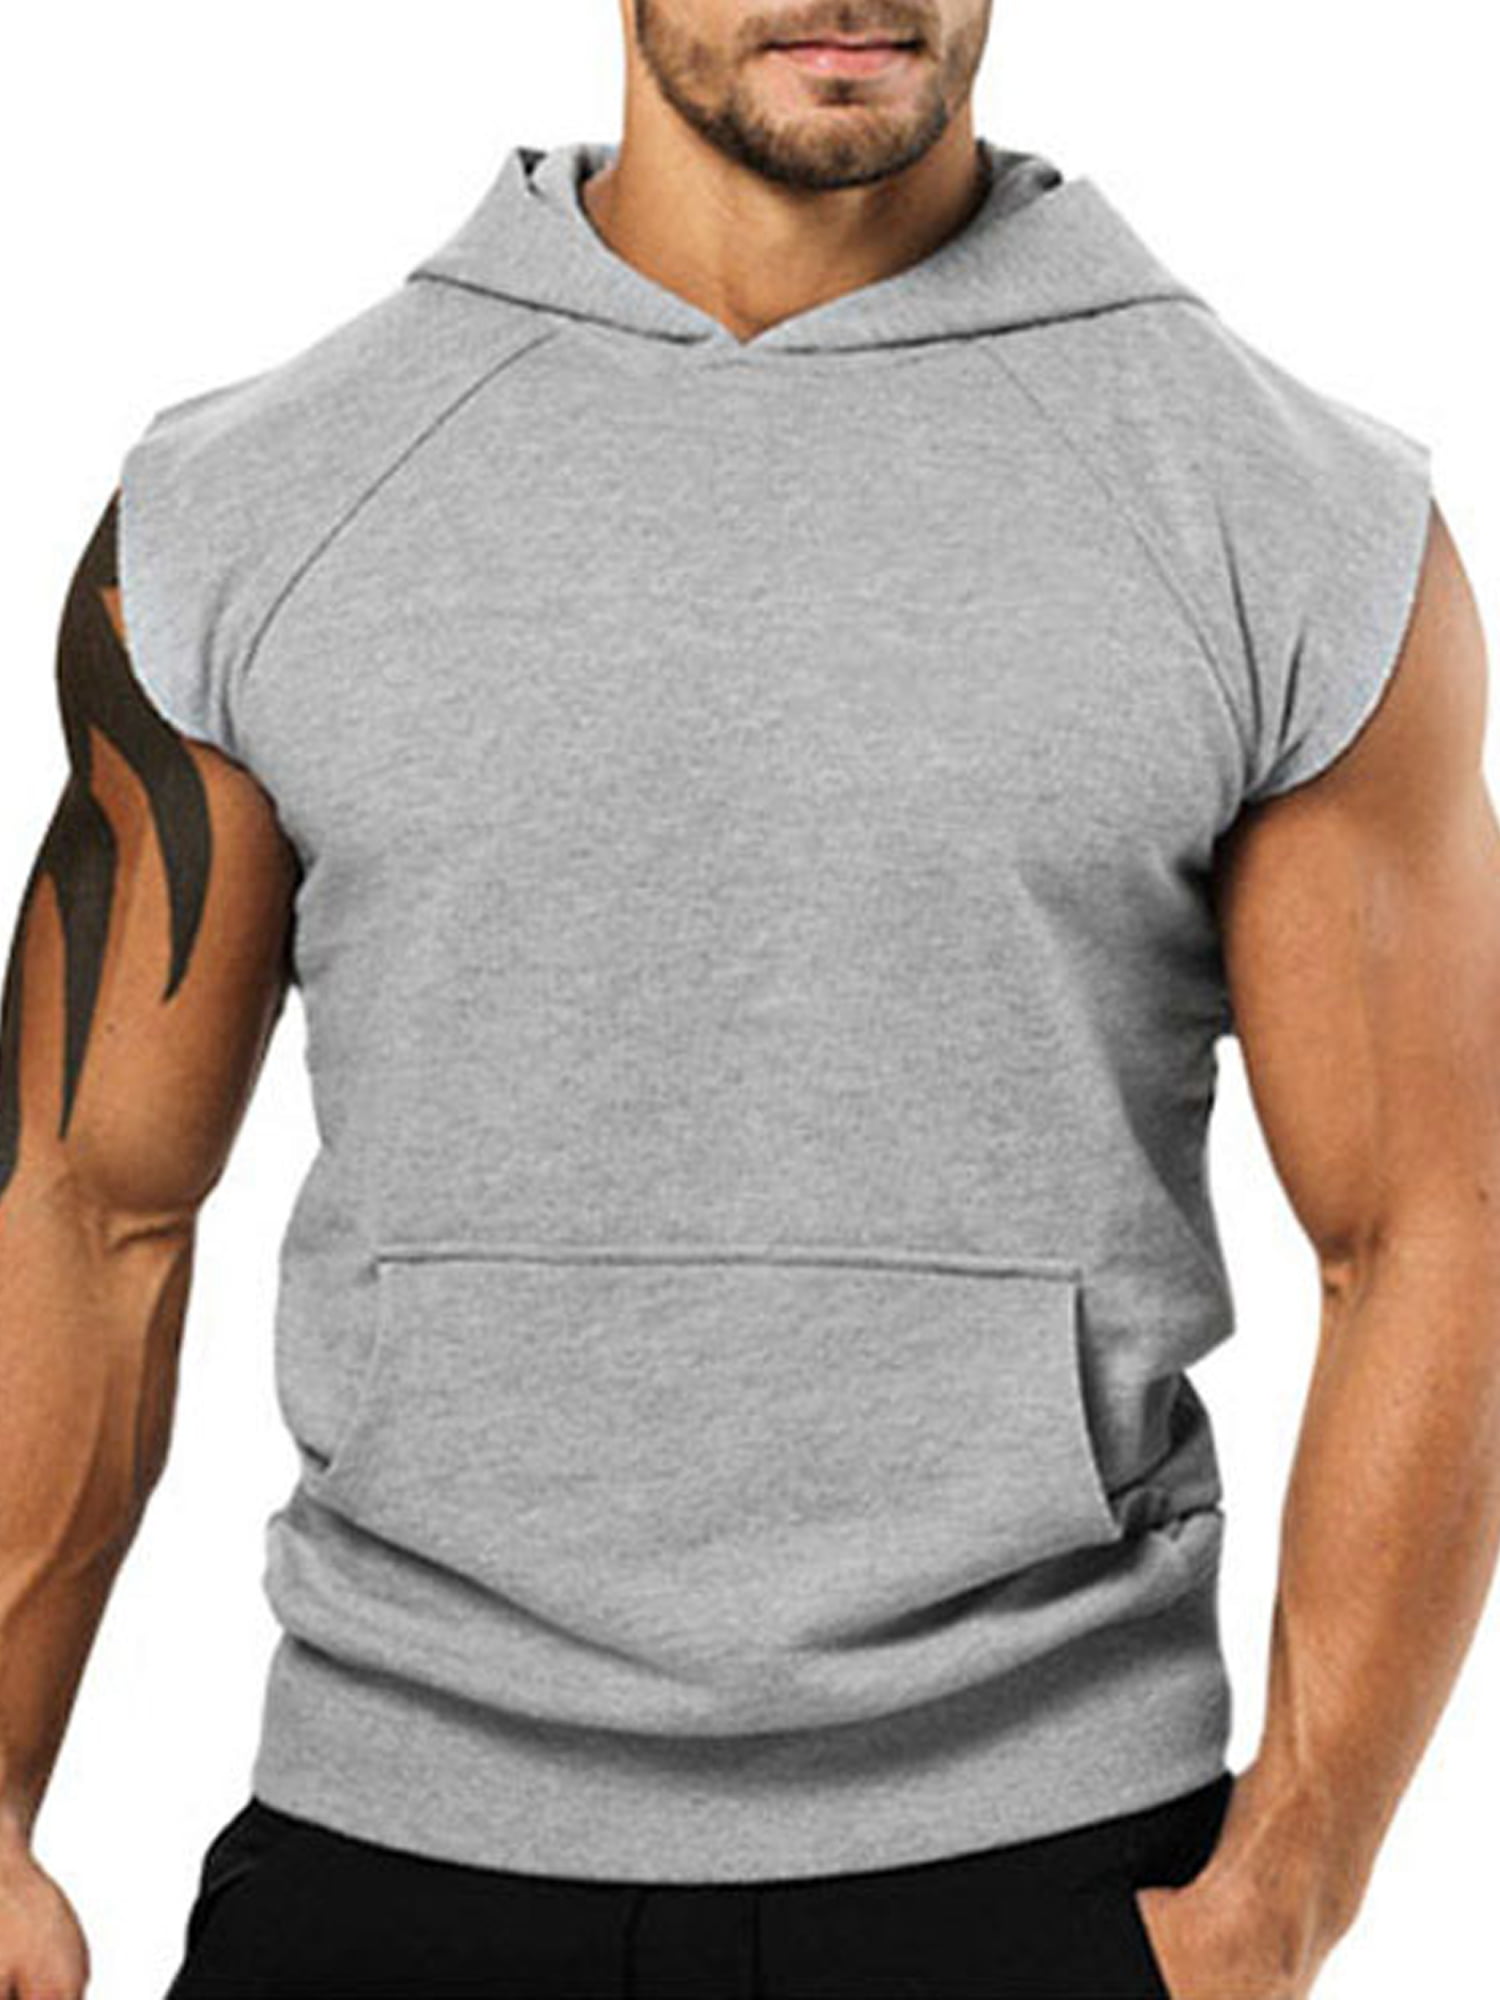 Mens Gym Sleeveless Top Vest Hoodie Bodybuilding Tank Top Muscle Hooded T-shirt 